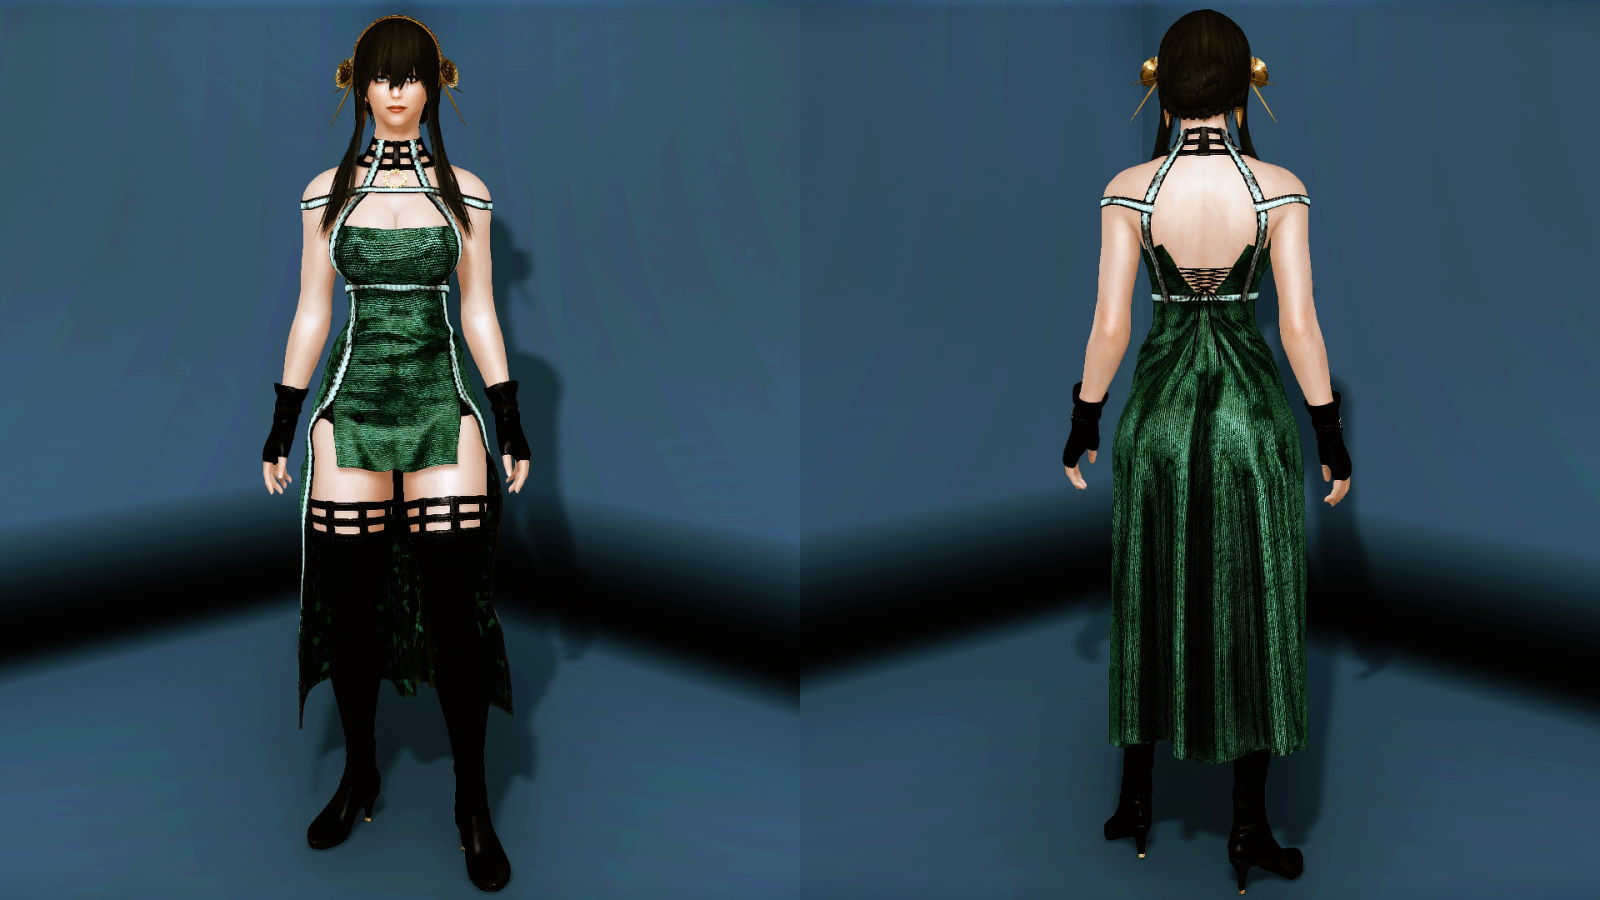 ThornPrincessSSE 121-1 Pose Dress Emerald 2